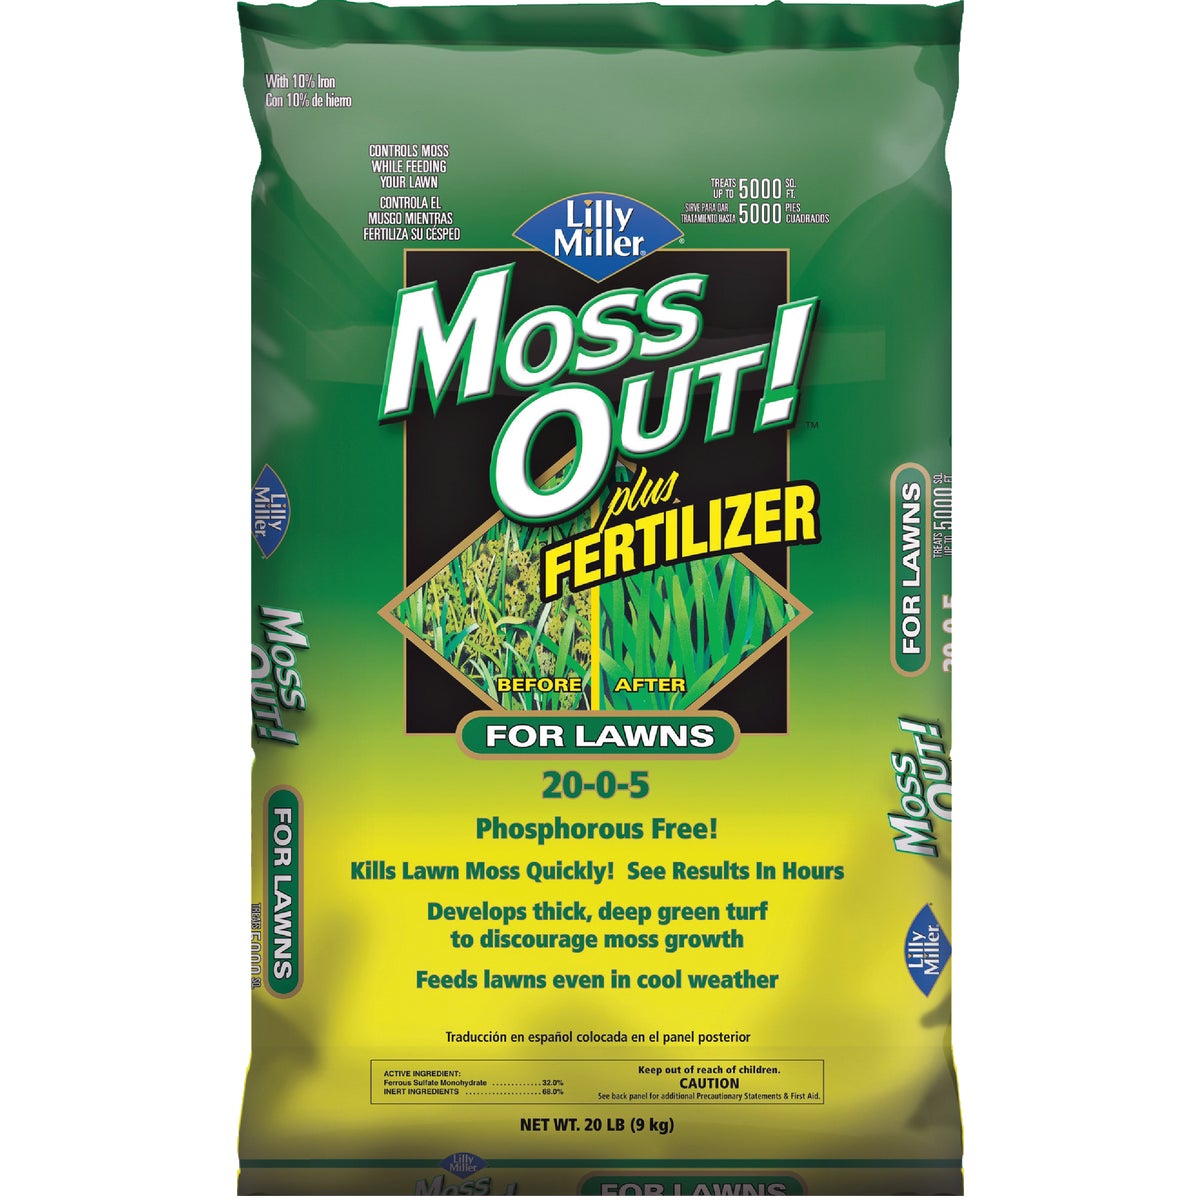 Item 750814, Moss control plus lawn fertilizer. 20-0-5 formulation, phosphorus free.